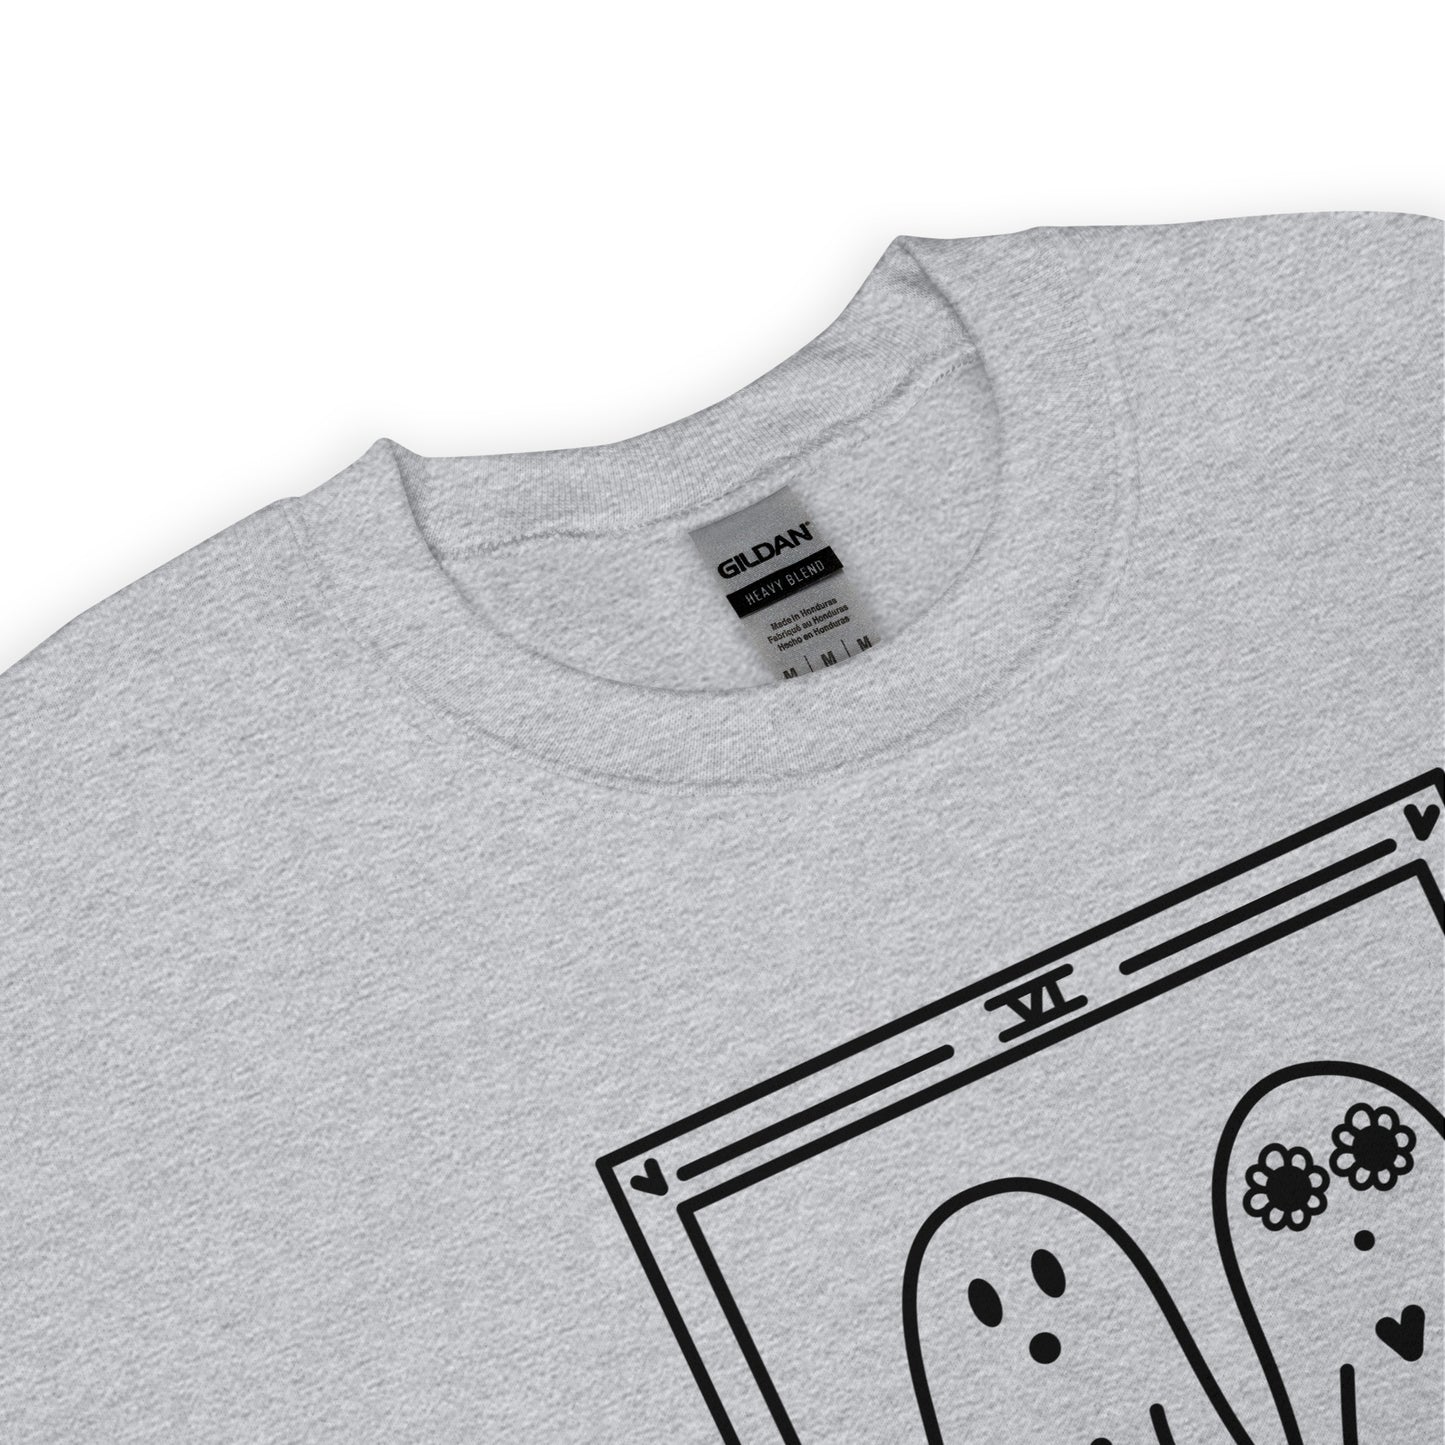 Ghost Lovers Unisex Sweatshirt